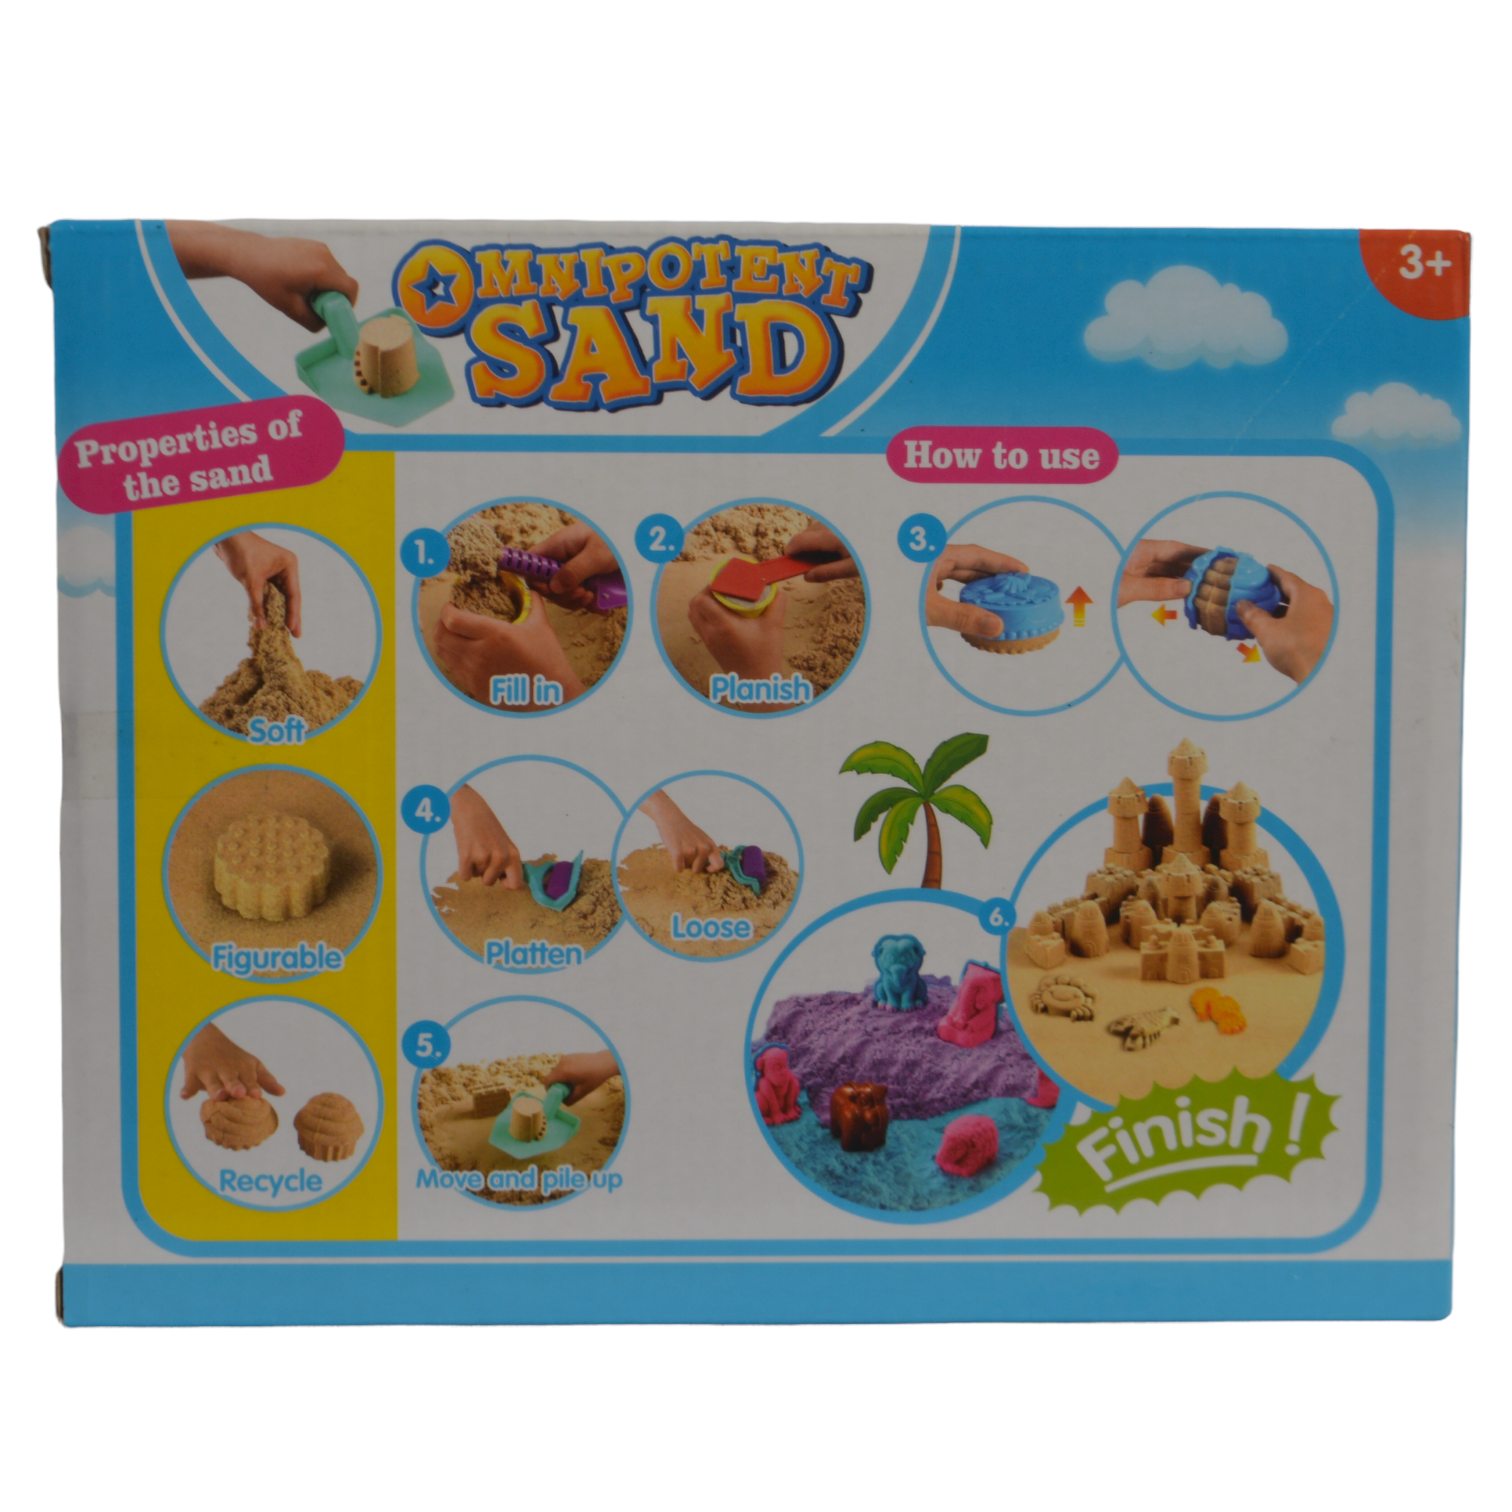 Play Dough Soft Modeling Sand